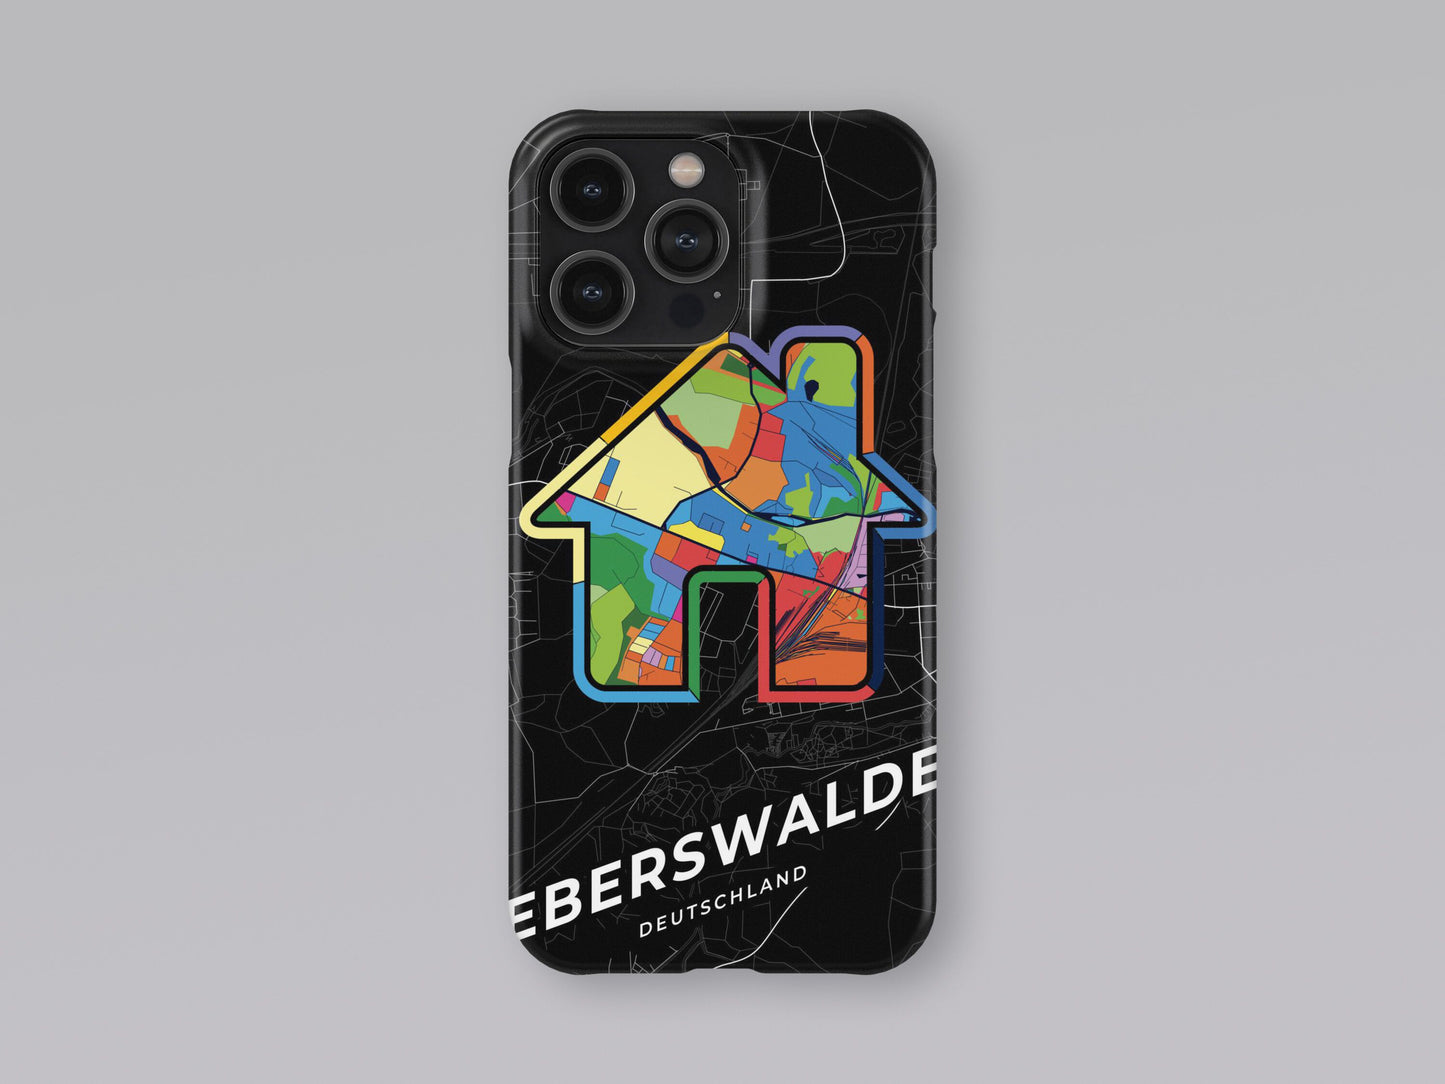 Eberswalde Deutschland slim phone case with colorful icon. Birthday, wedding or housewarming gift. Couple match cases. 3